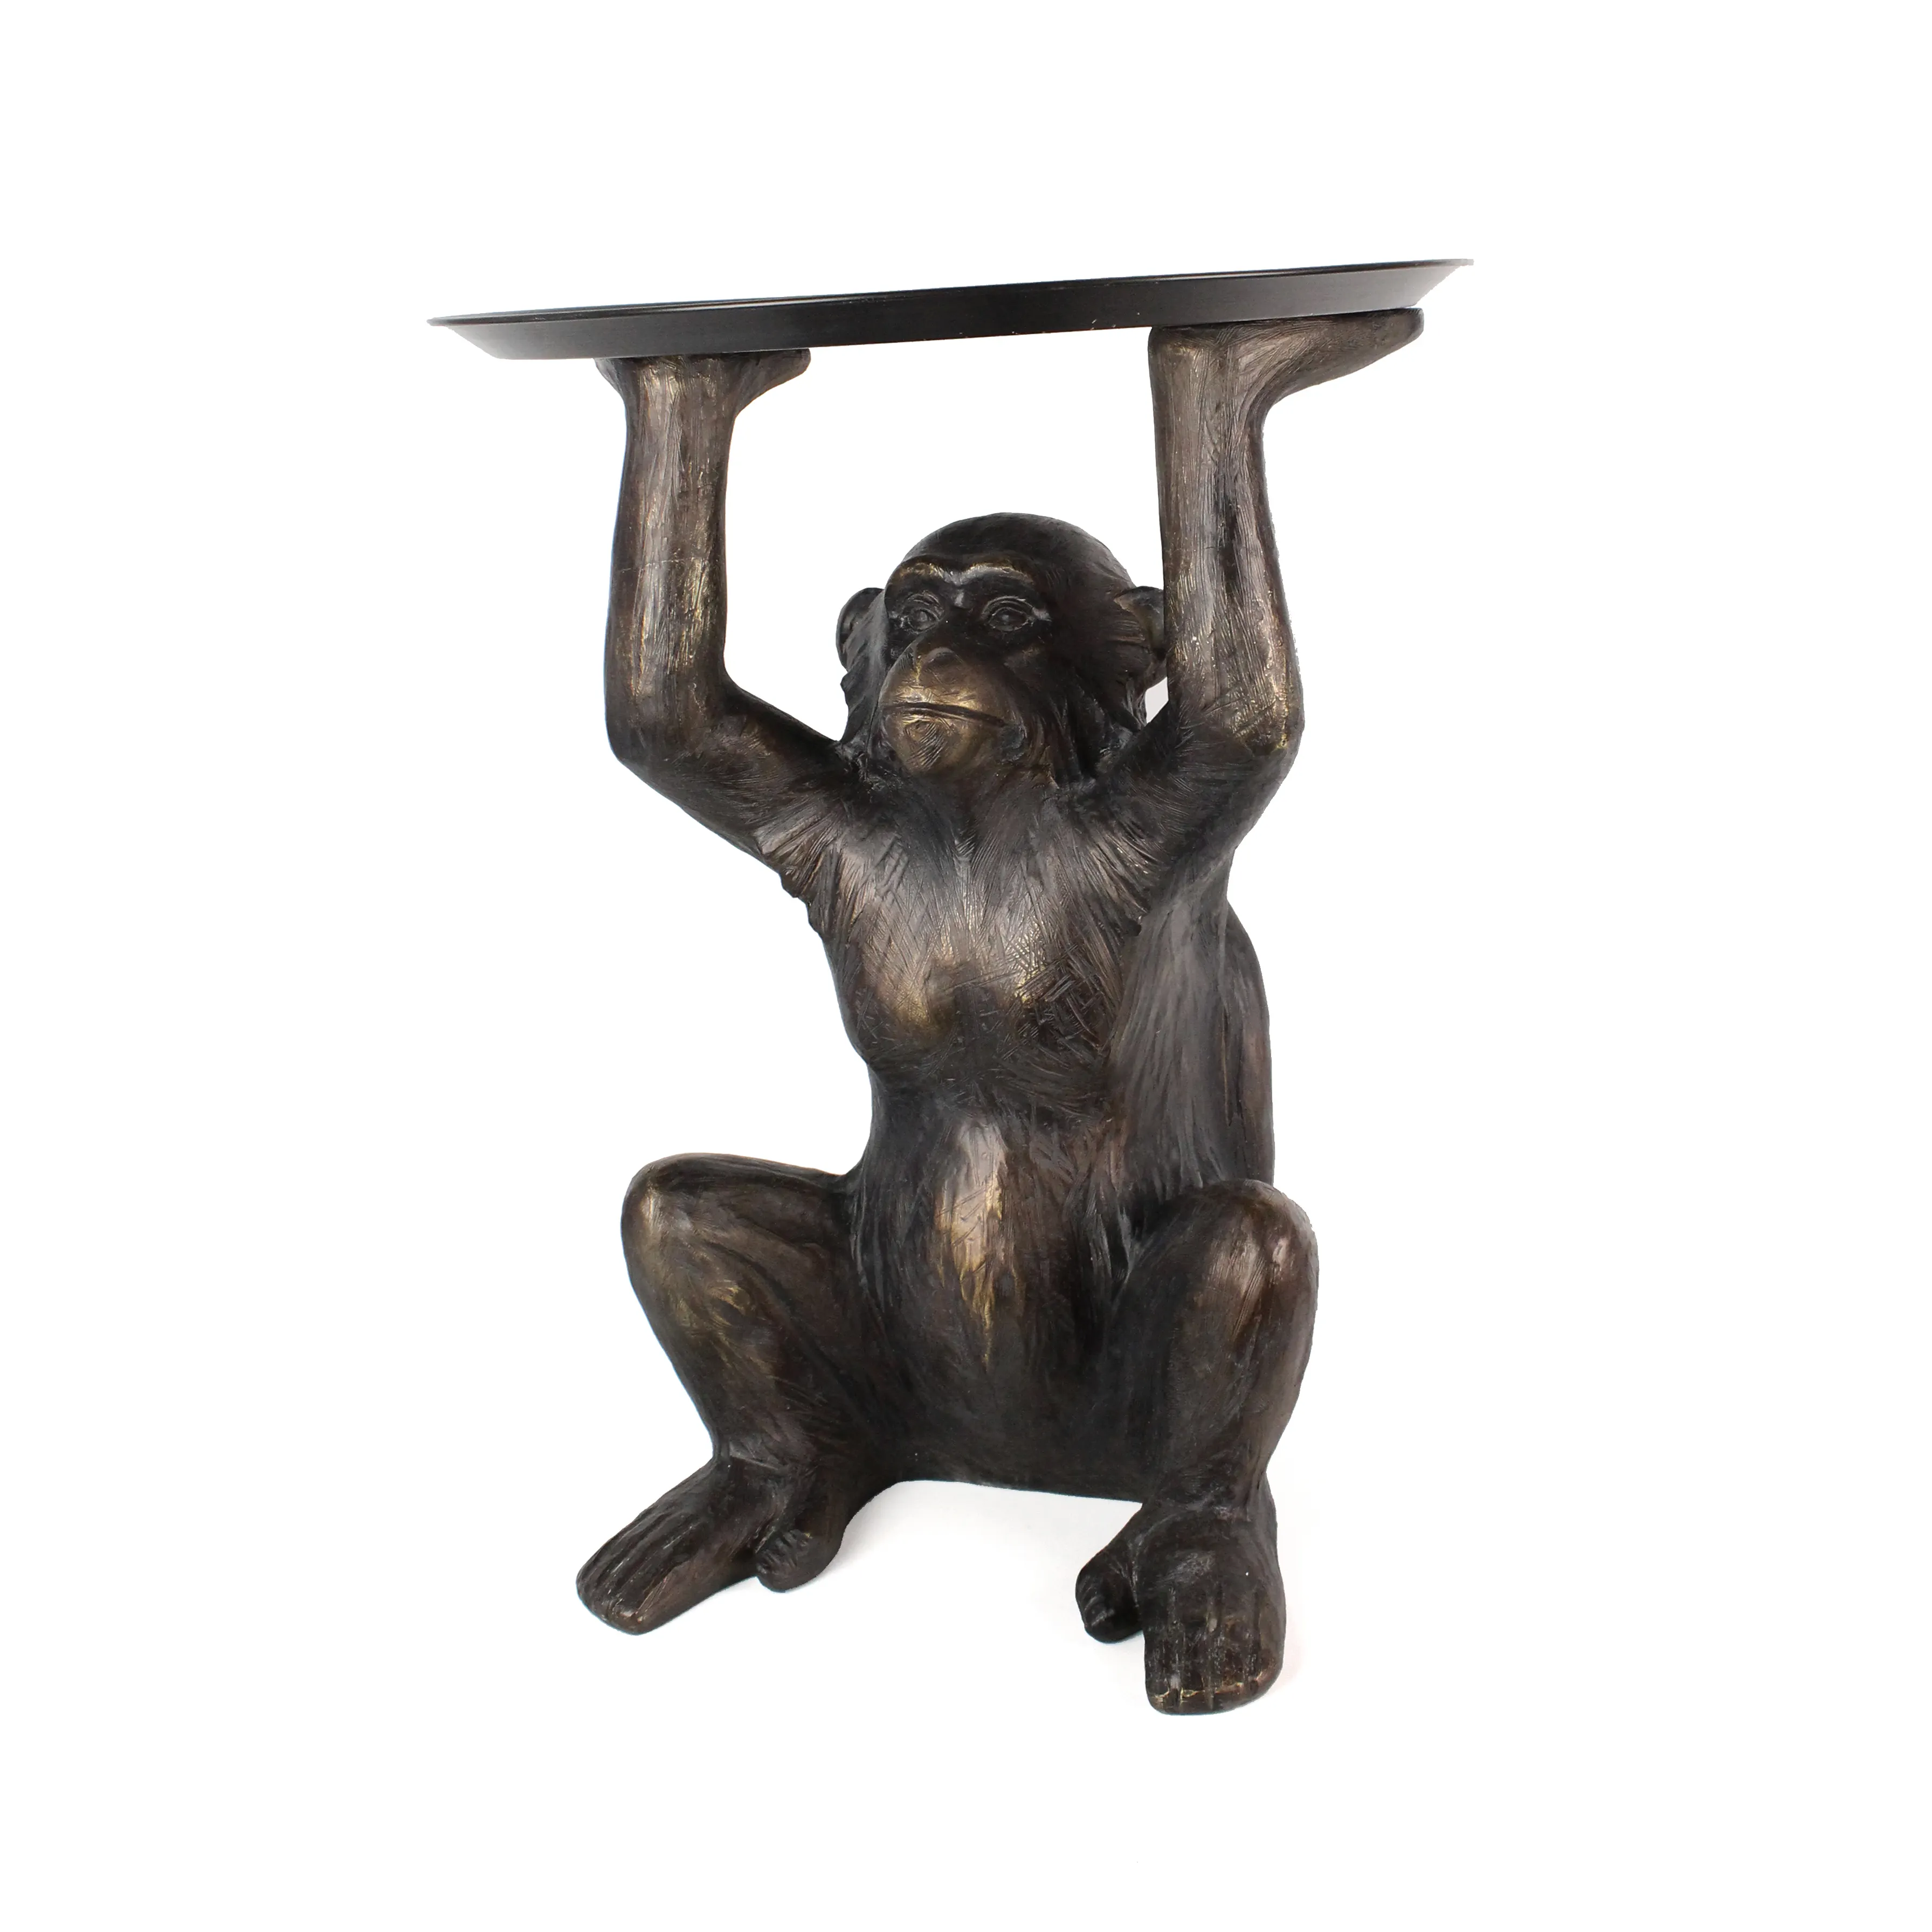 Resin Animal Monkey Hold Metal Tray Sculpture Garden Home Decor Crafts